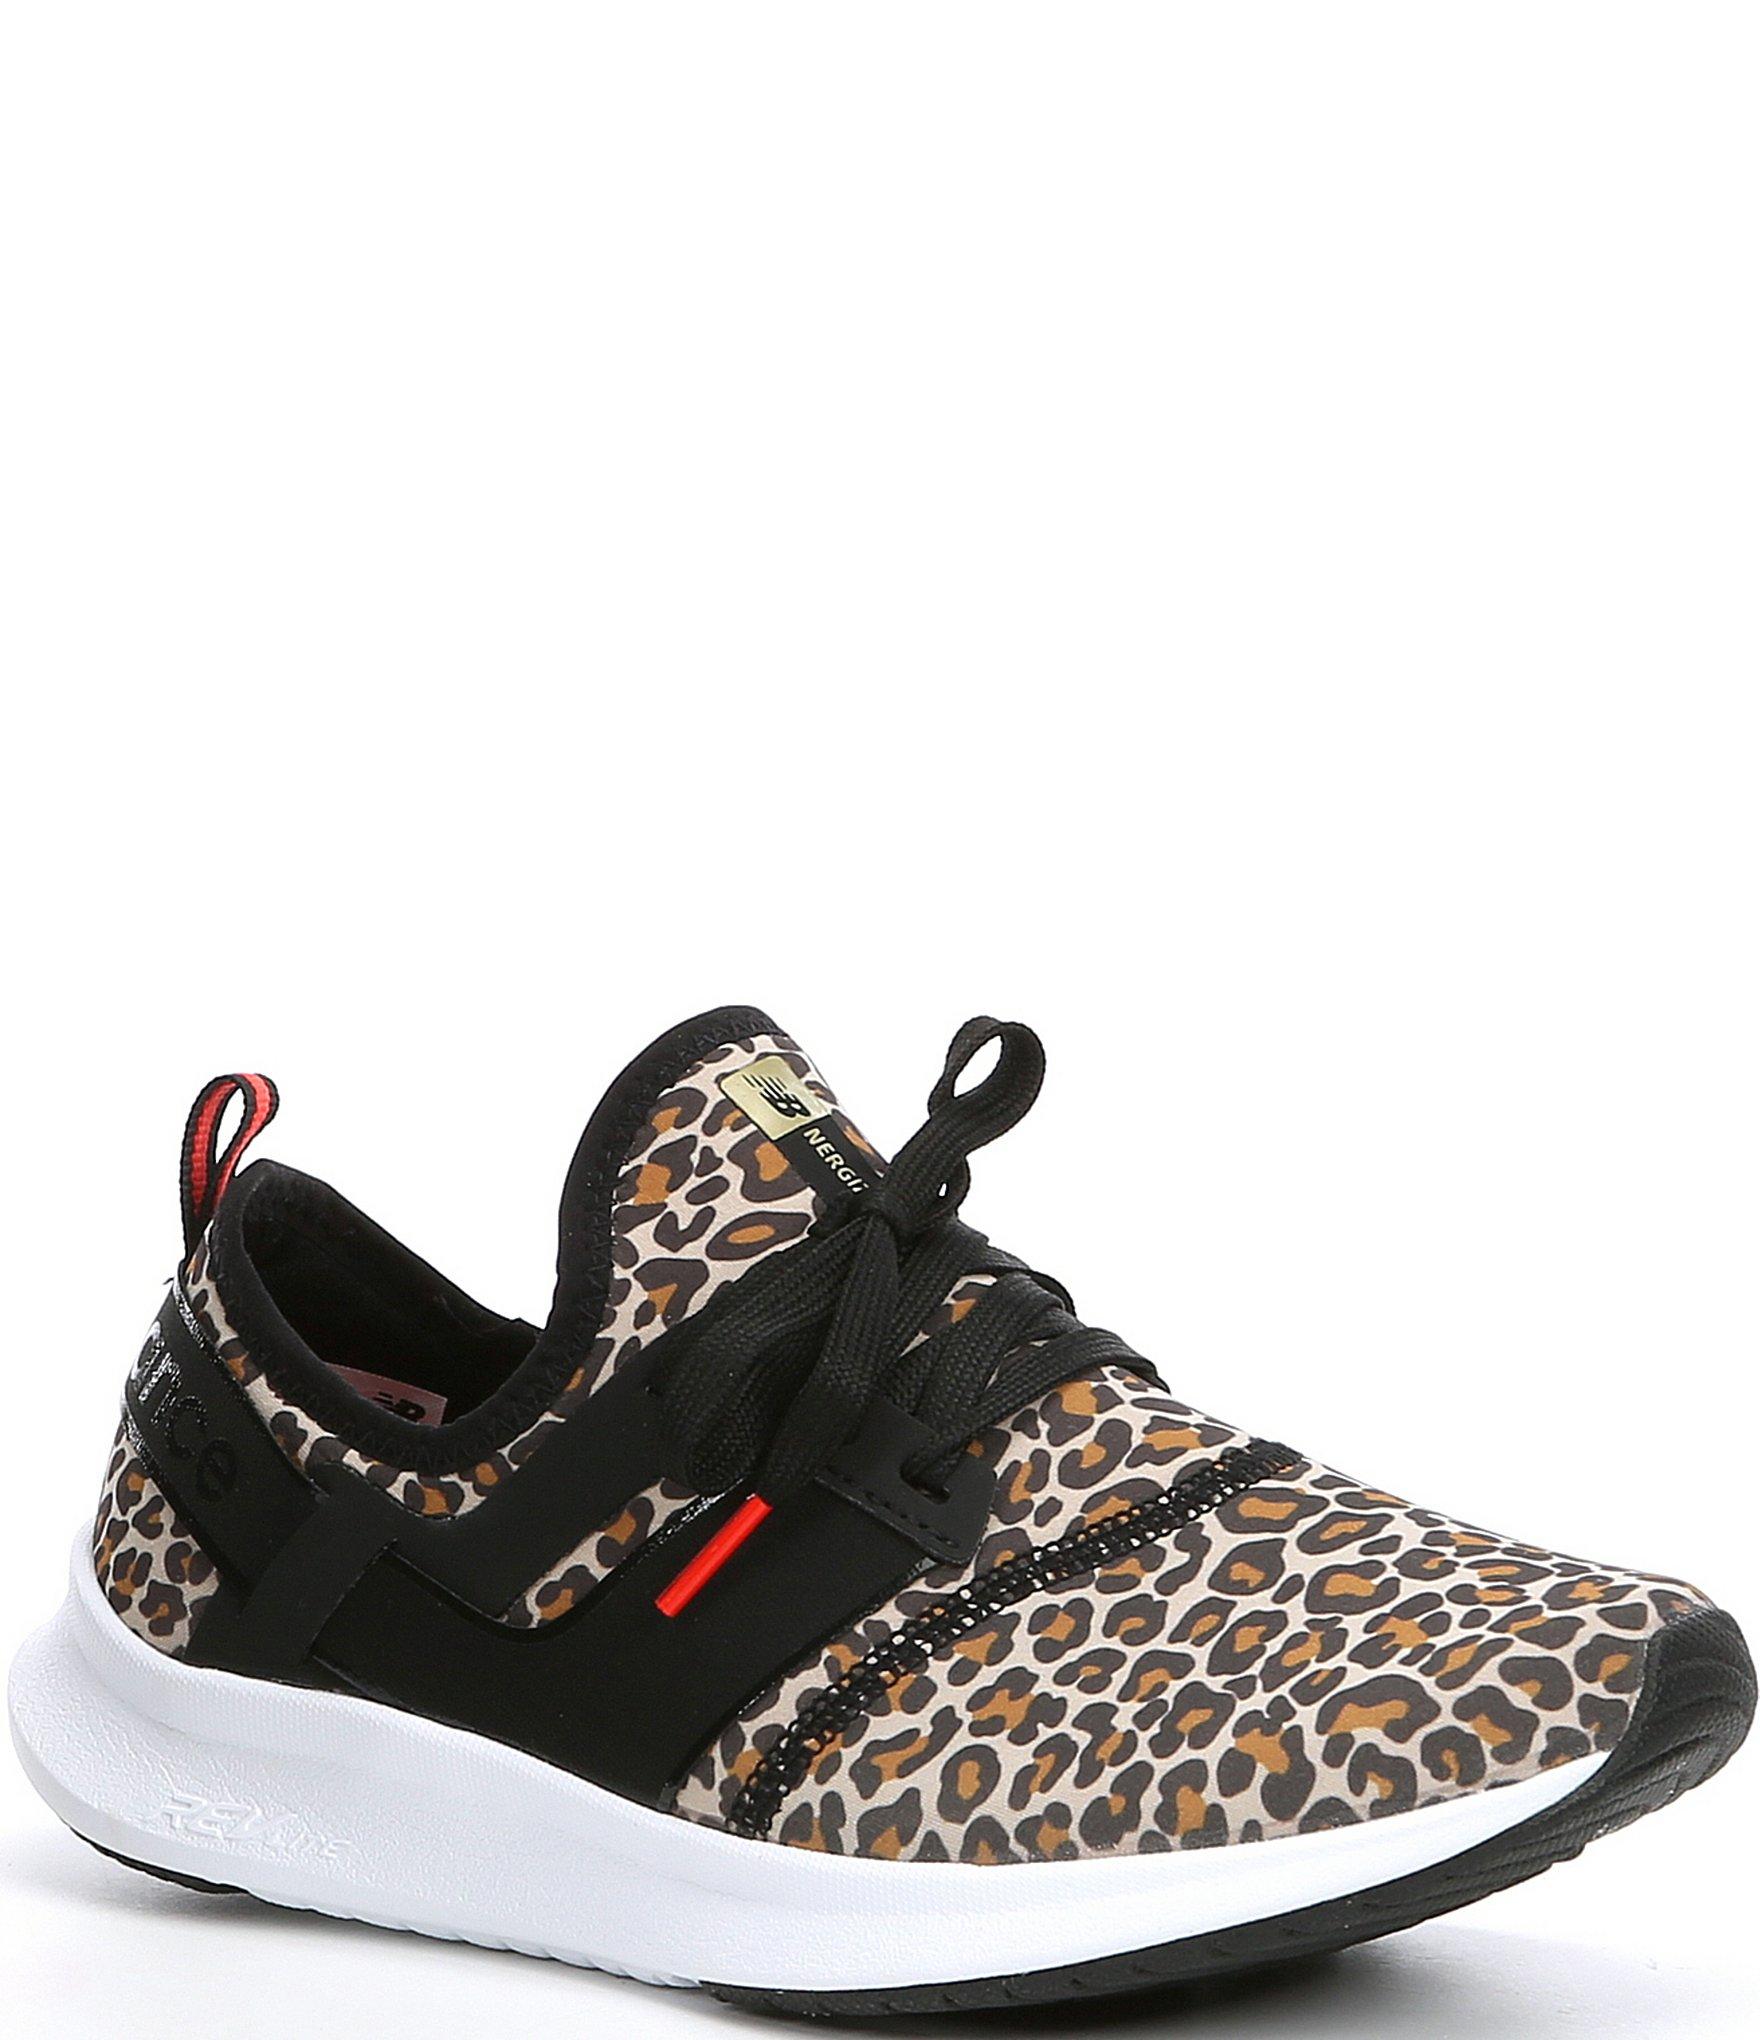 New Balance Leopard Print Shoes Style Guru Fashion